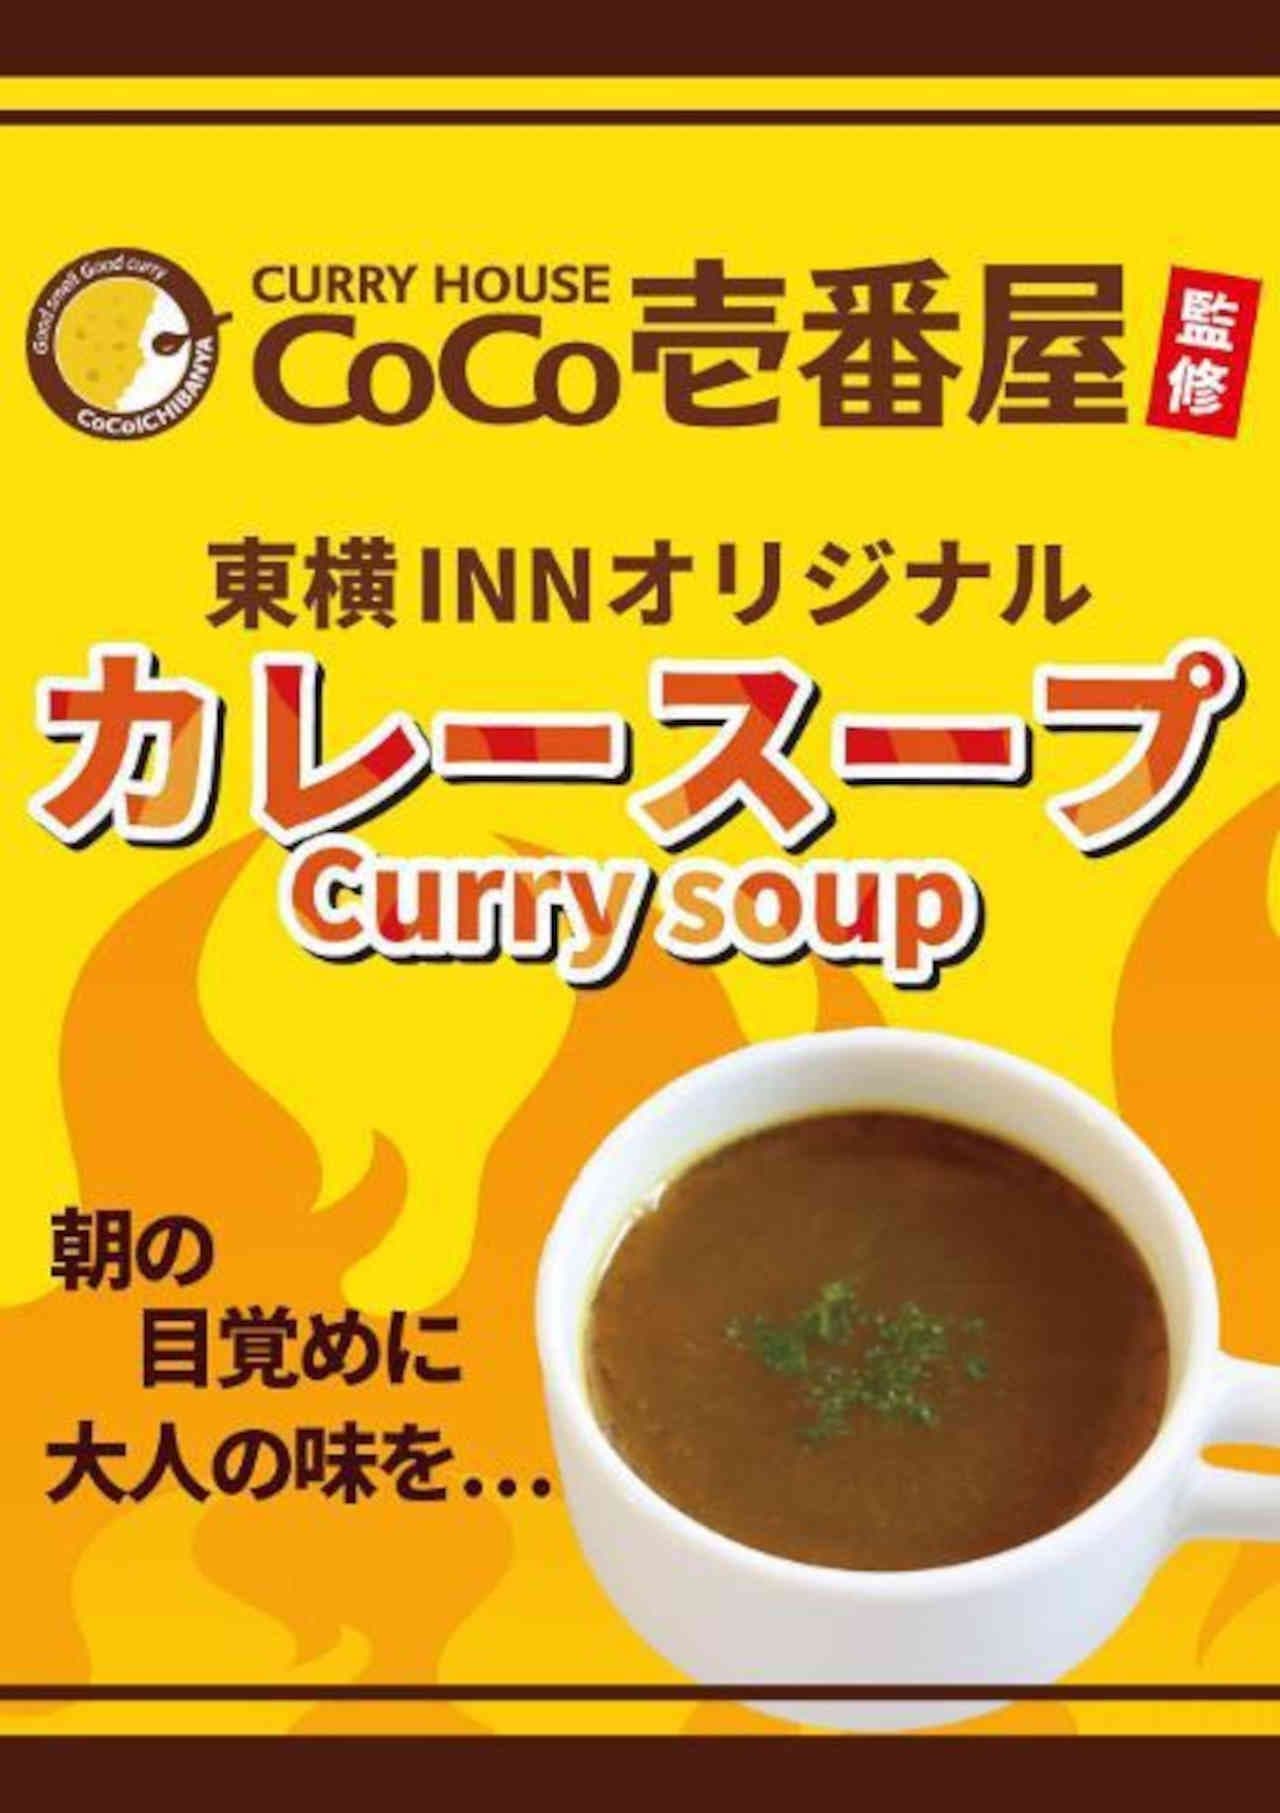 Coco Ichibanya "CoCo Ichibanya supervised Toyoko INN original curry soup